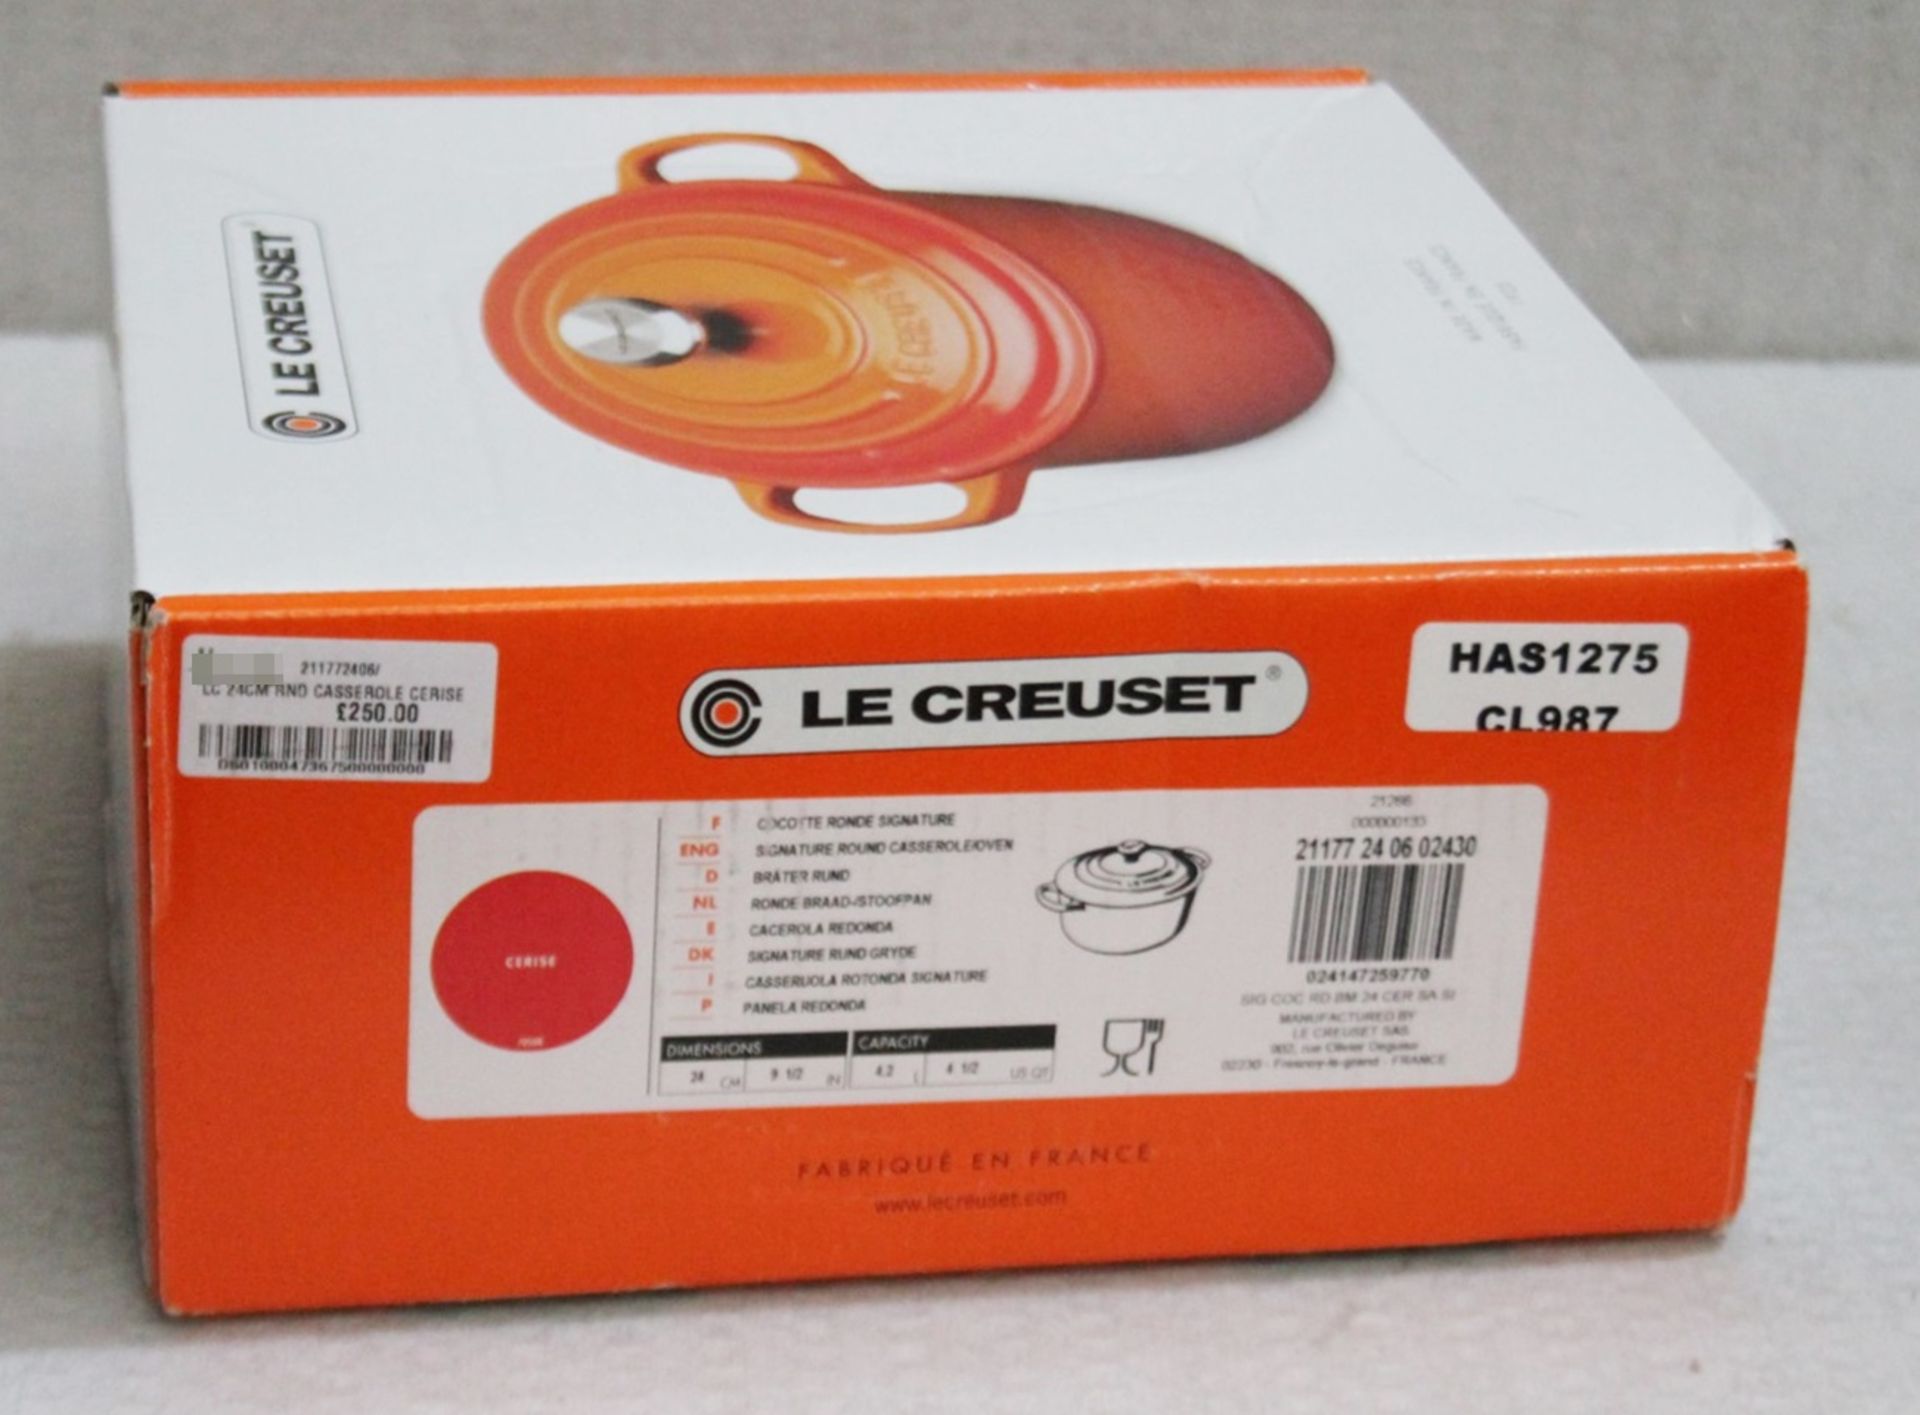 1 x LE CREUSET Enamelled Cast Iron 24cm Rnd Casserole Cerise - Original Price £250.00 - Boxed Stock - Image 4 of 5